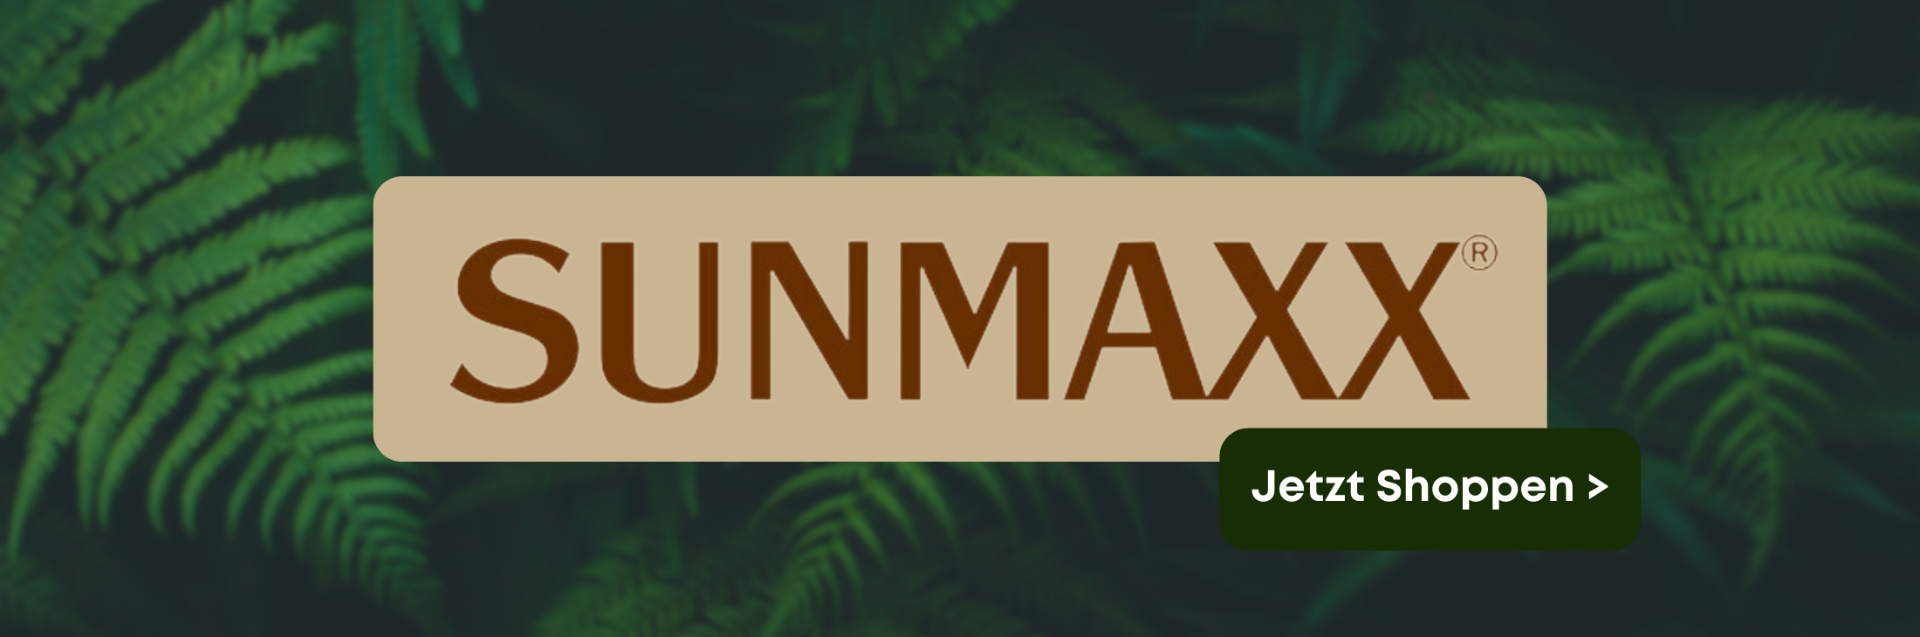 SUNMAXX Angebot